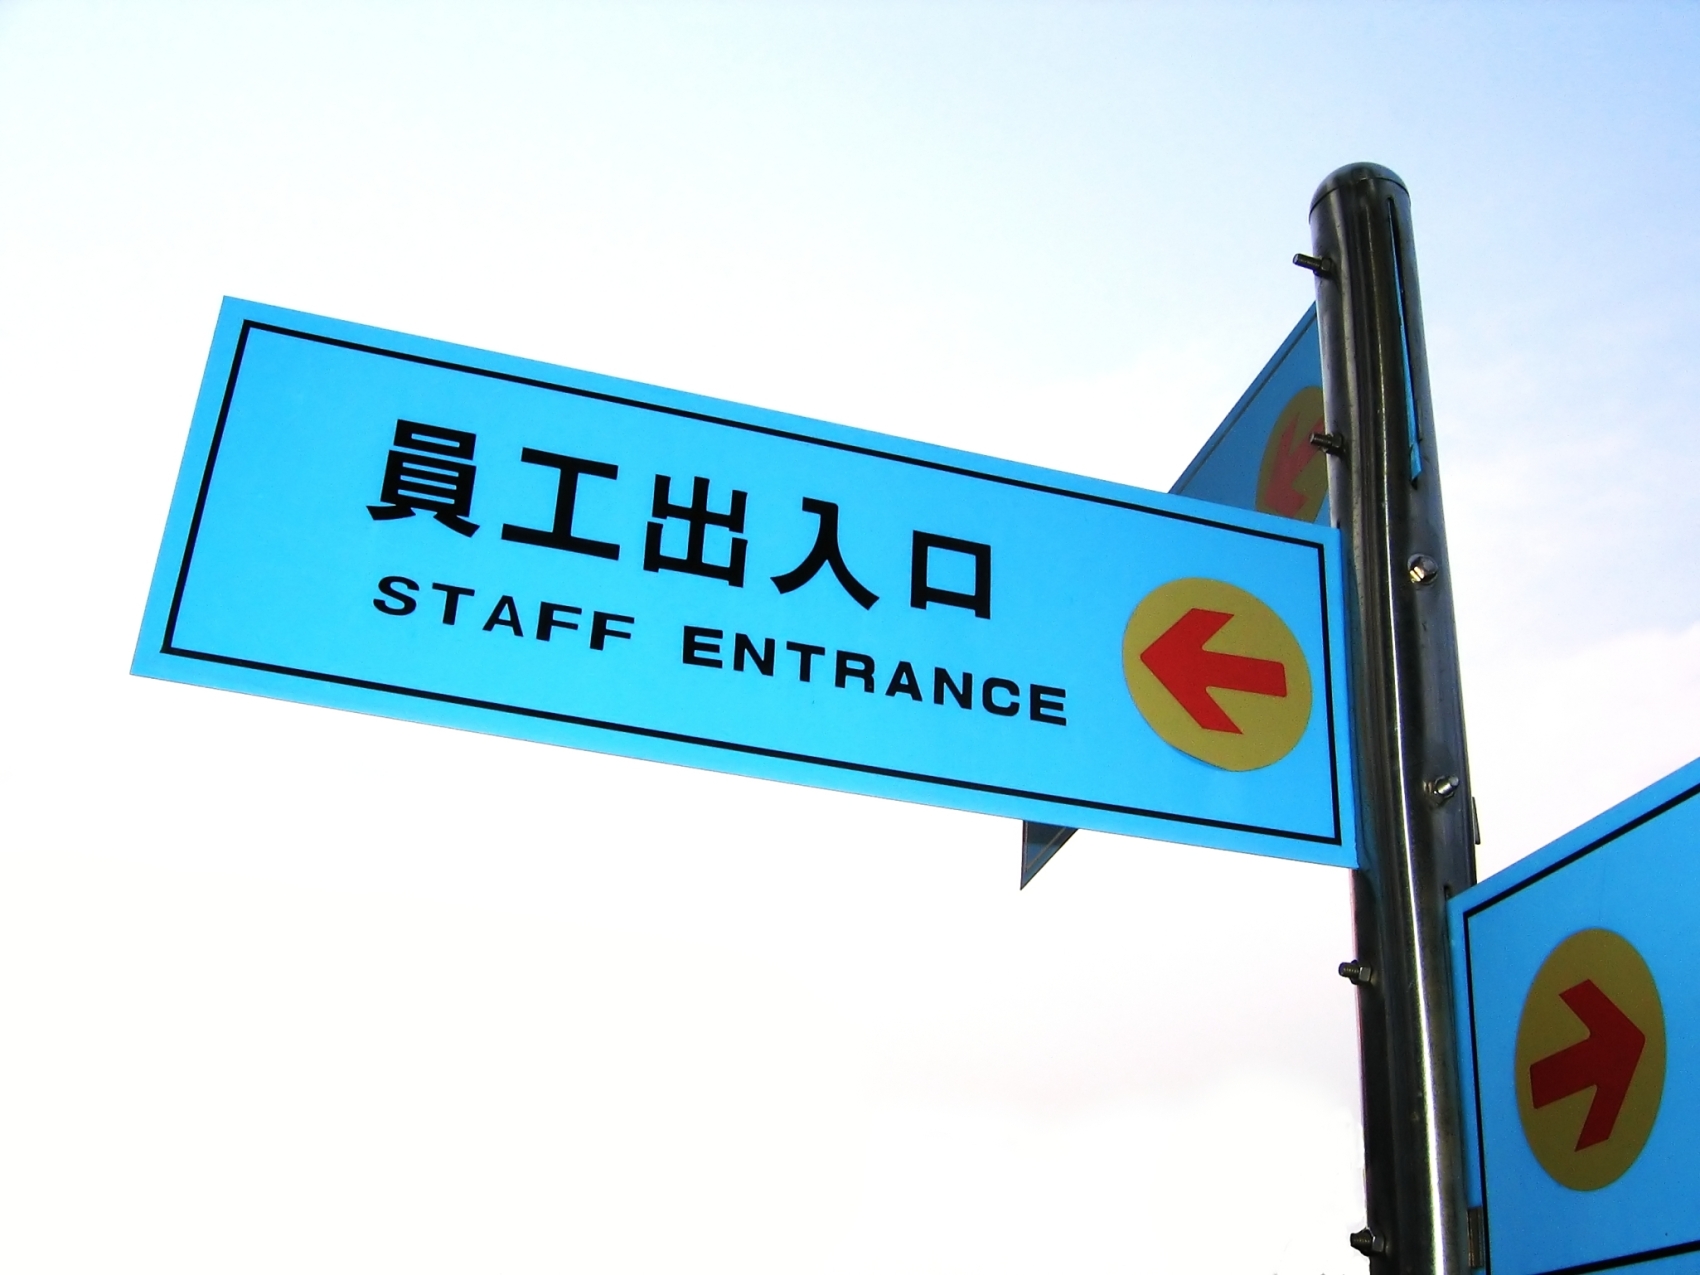 Staff entrance sign photo